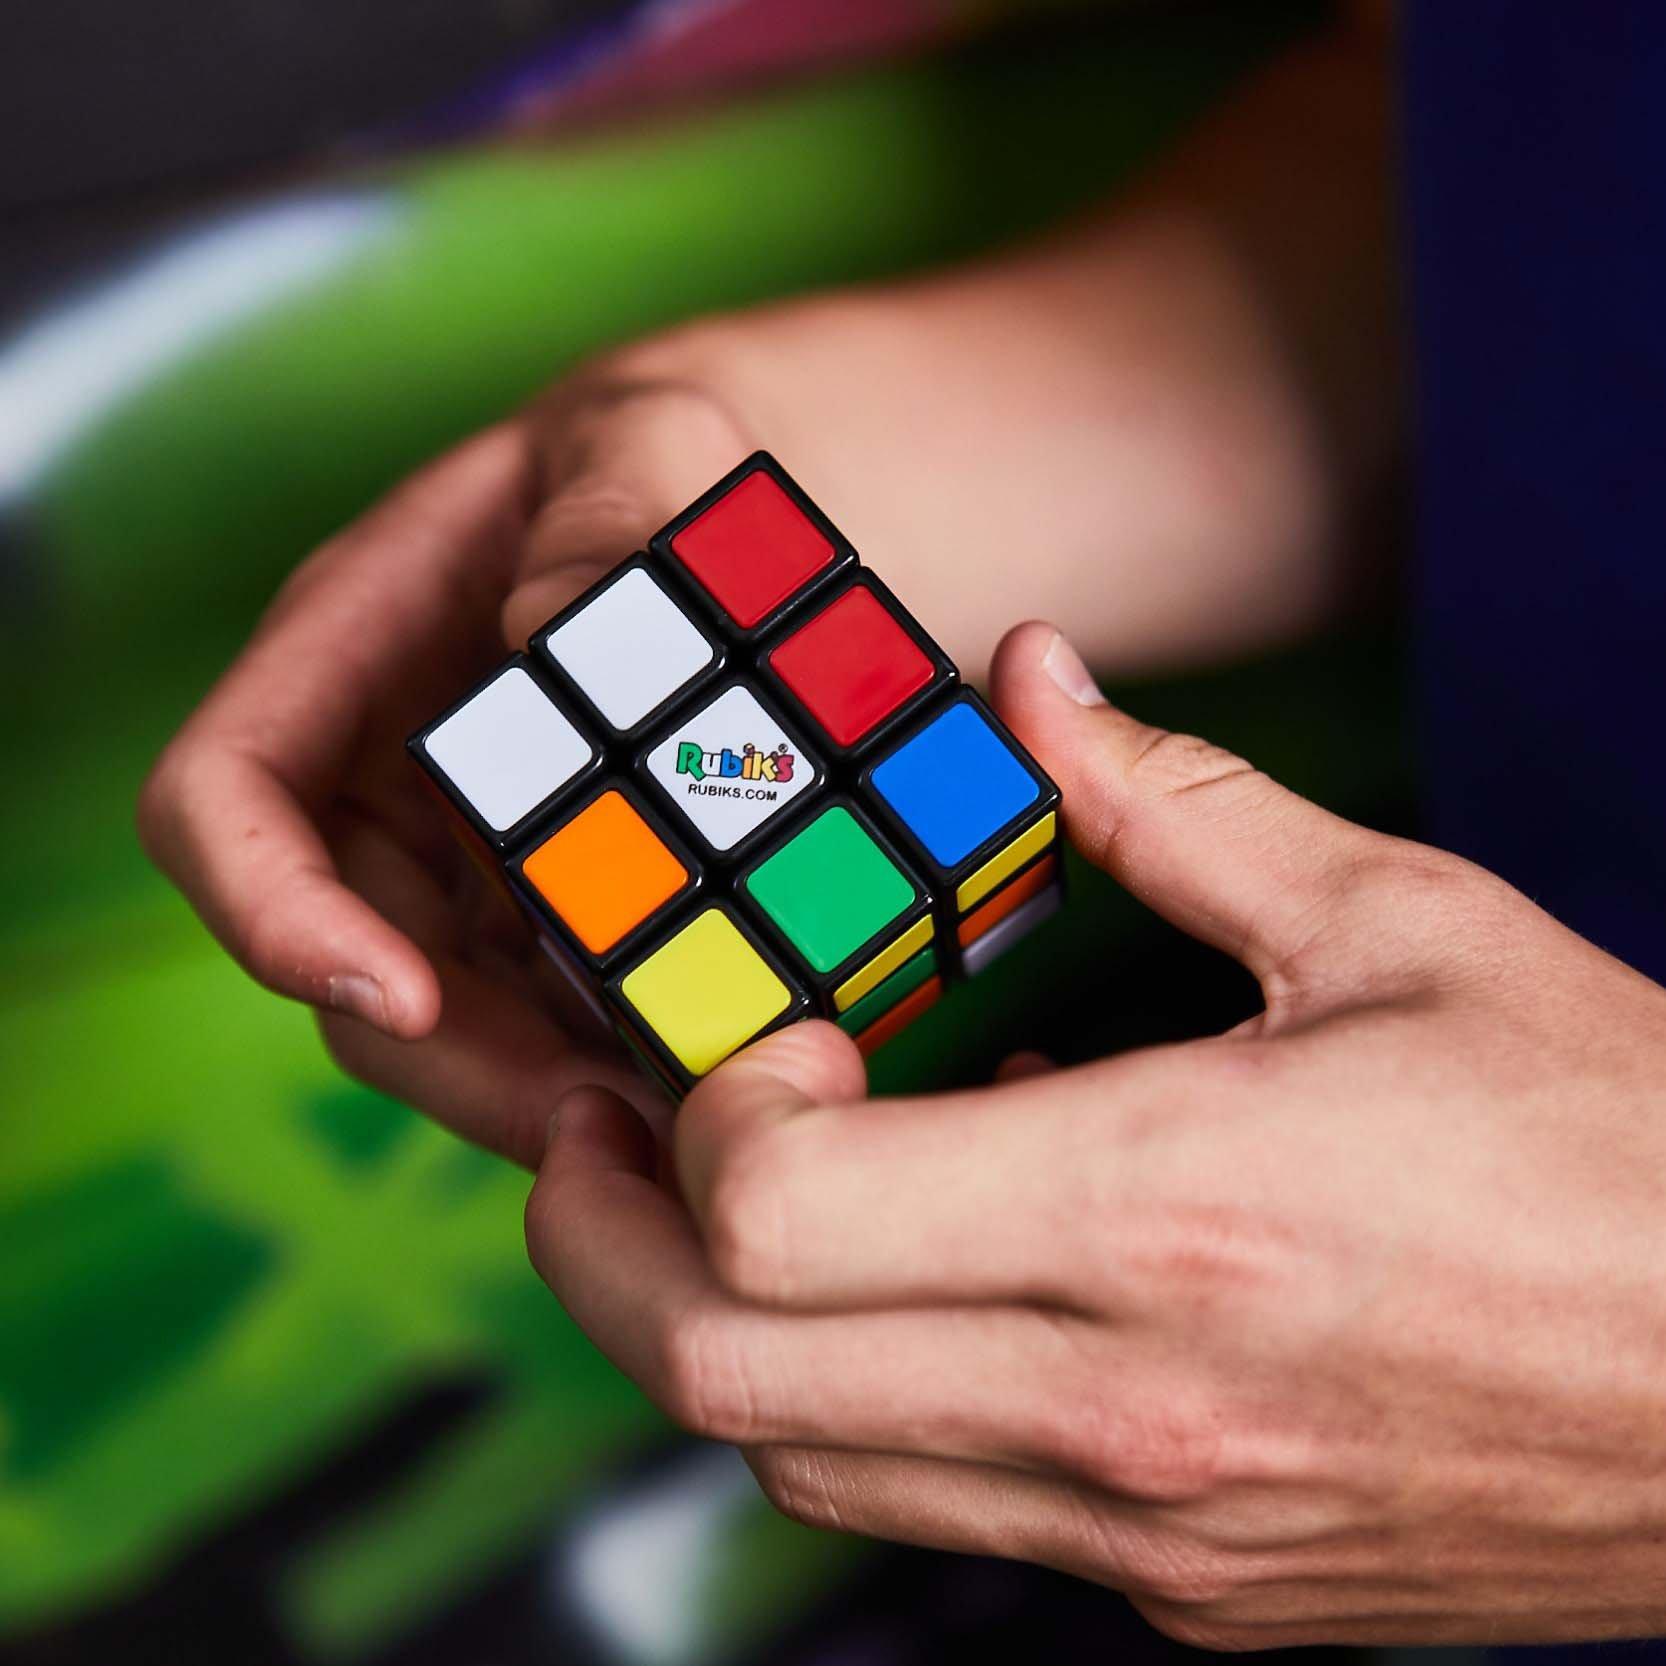 Rubik's Cube Toy by Hasbro